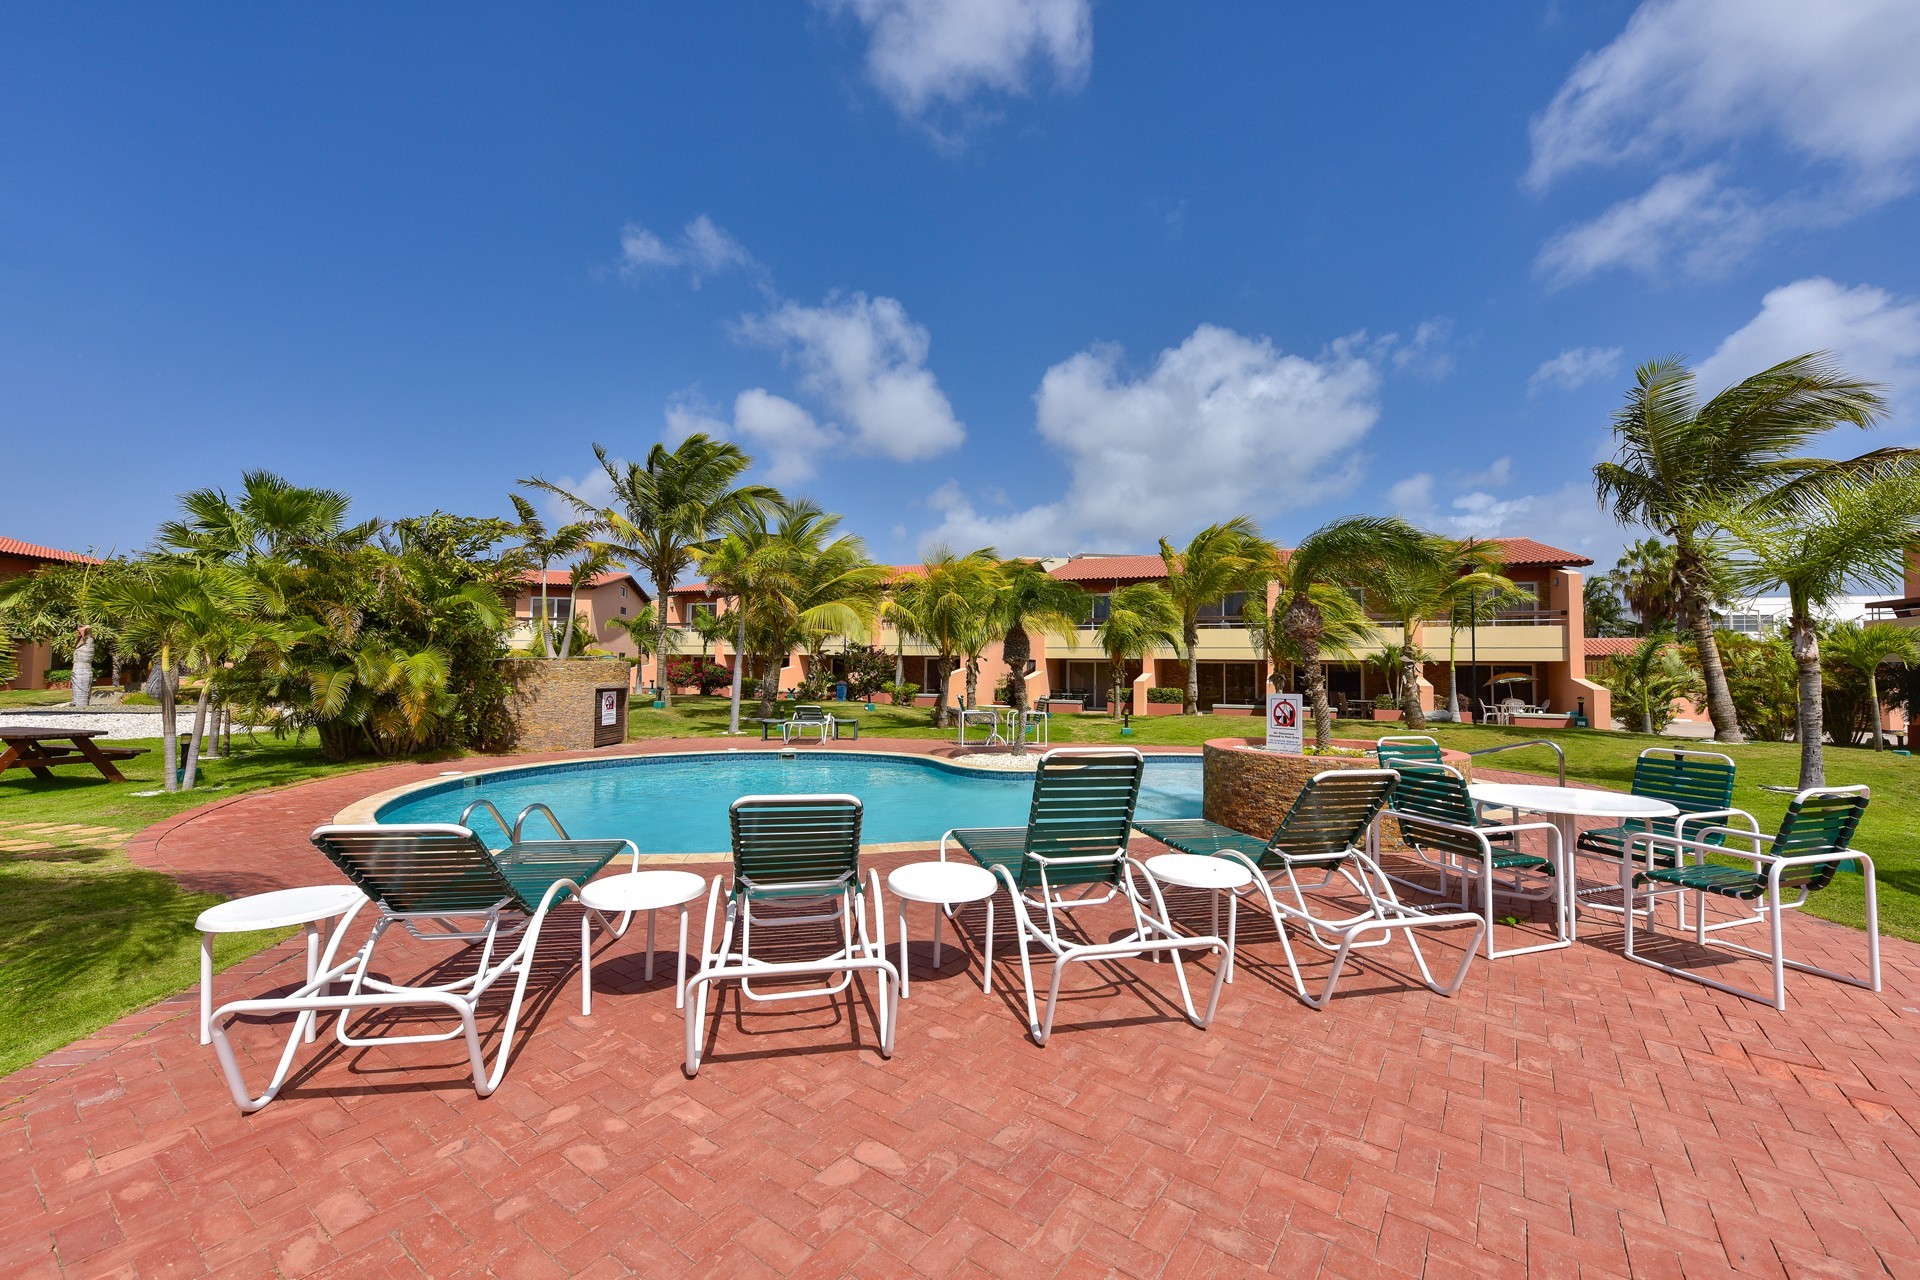 Jardines del Mar 26 - Condominium for Sale - RE/MAX Aruba